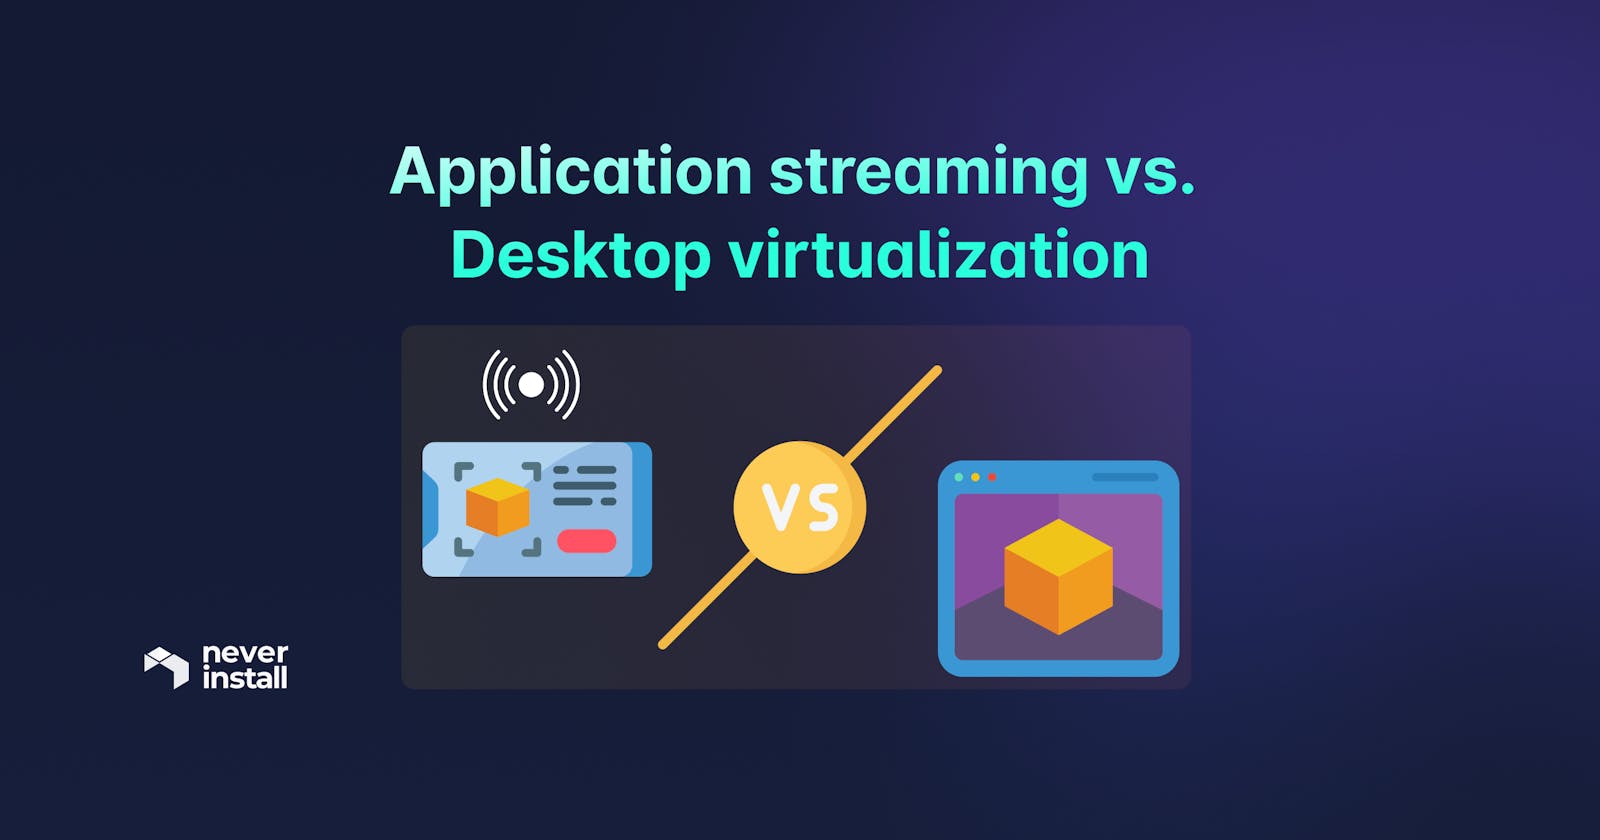 Application streaming vs. Desktop virtualization